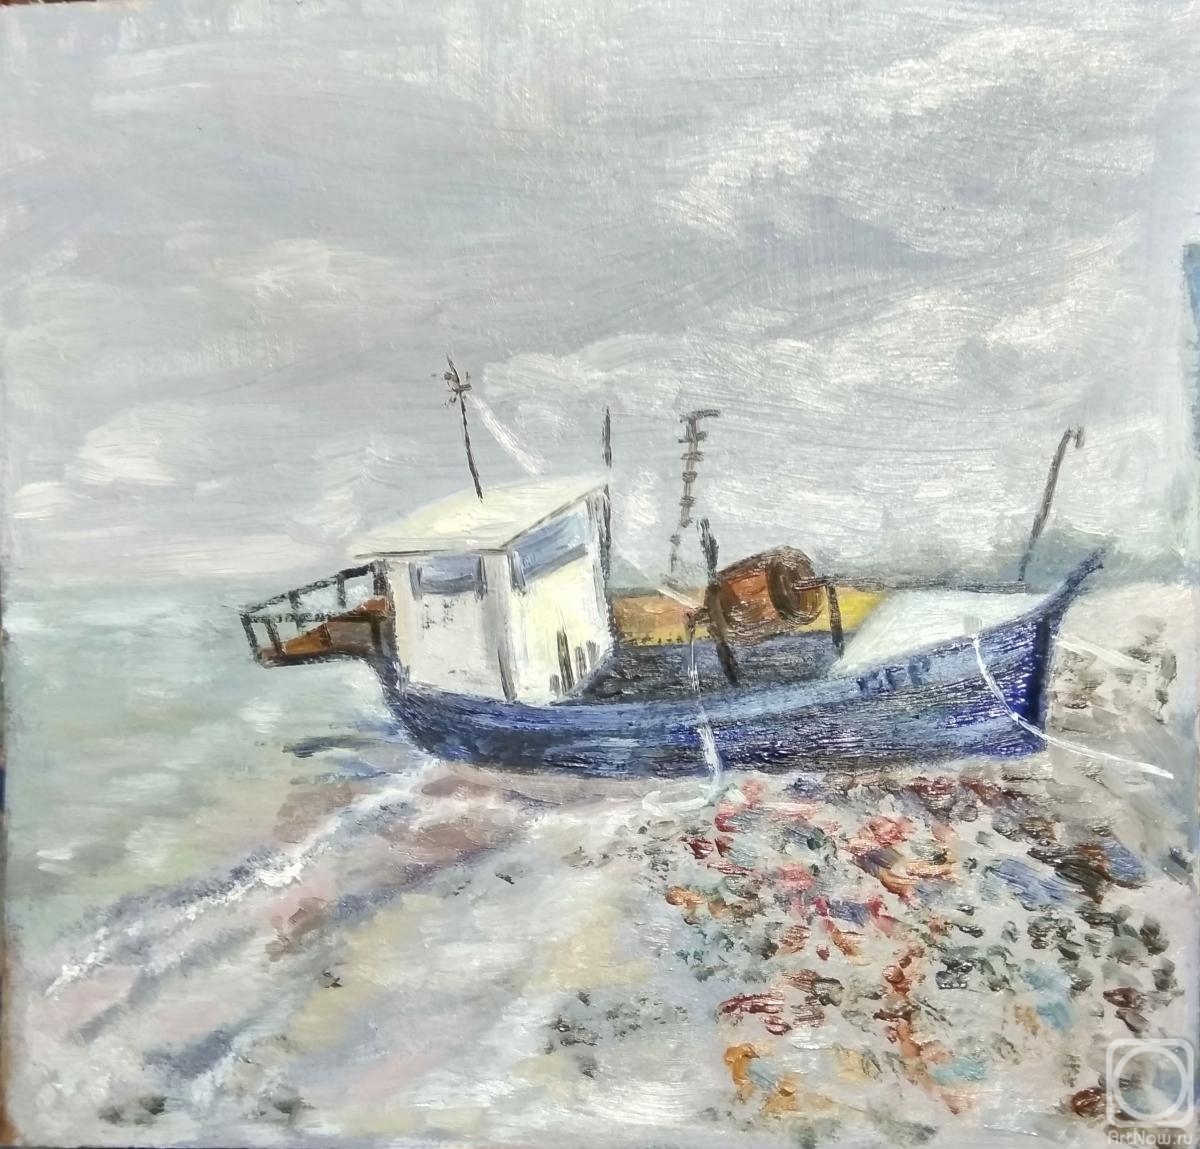 Gorenkova Anna. Boat in Storm